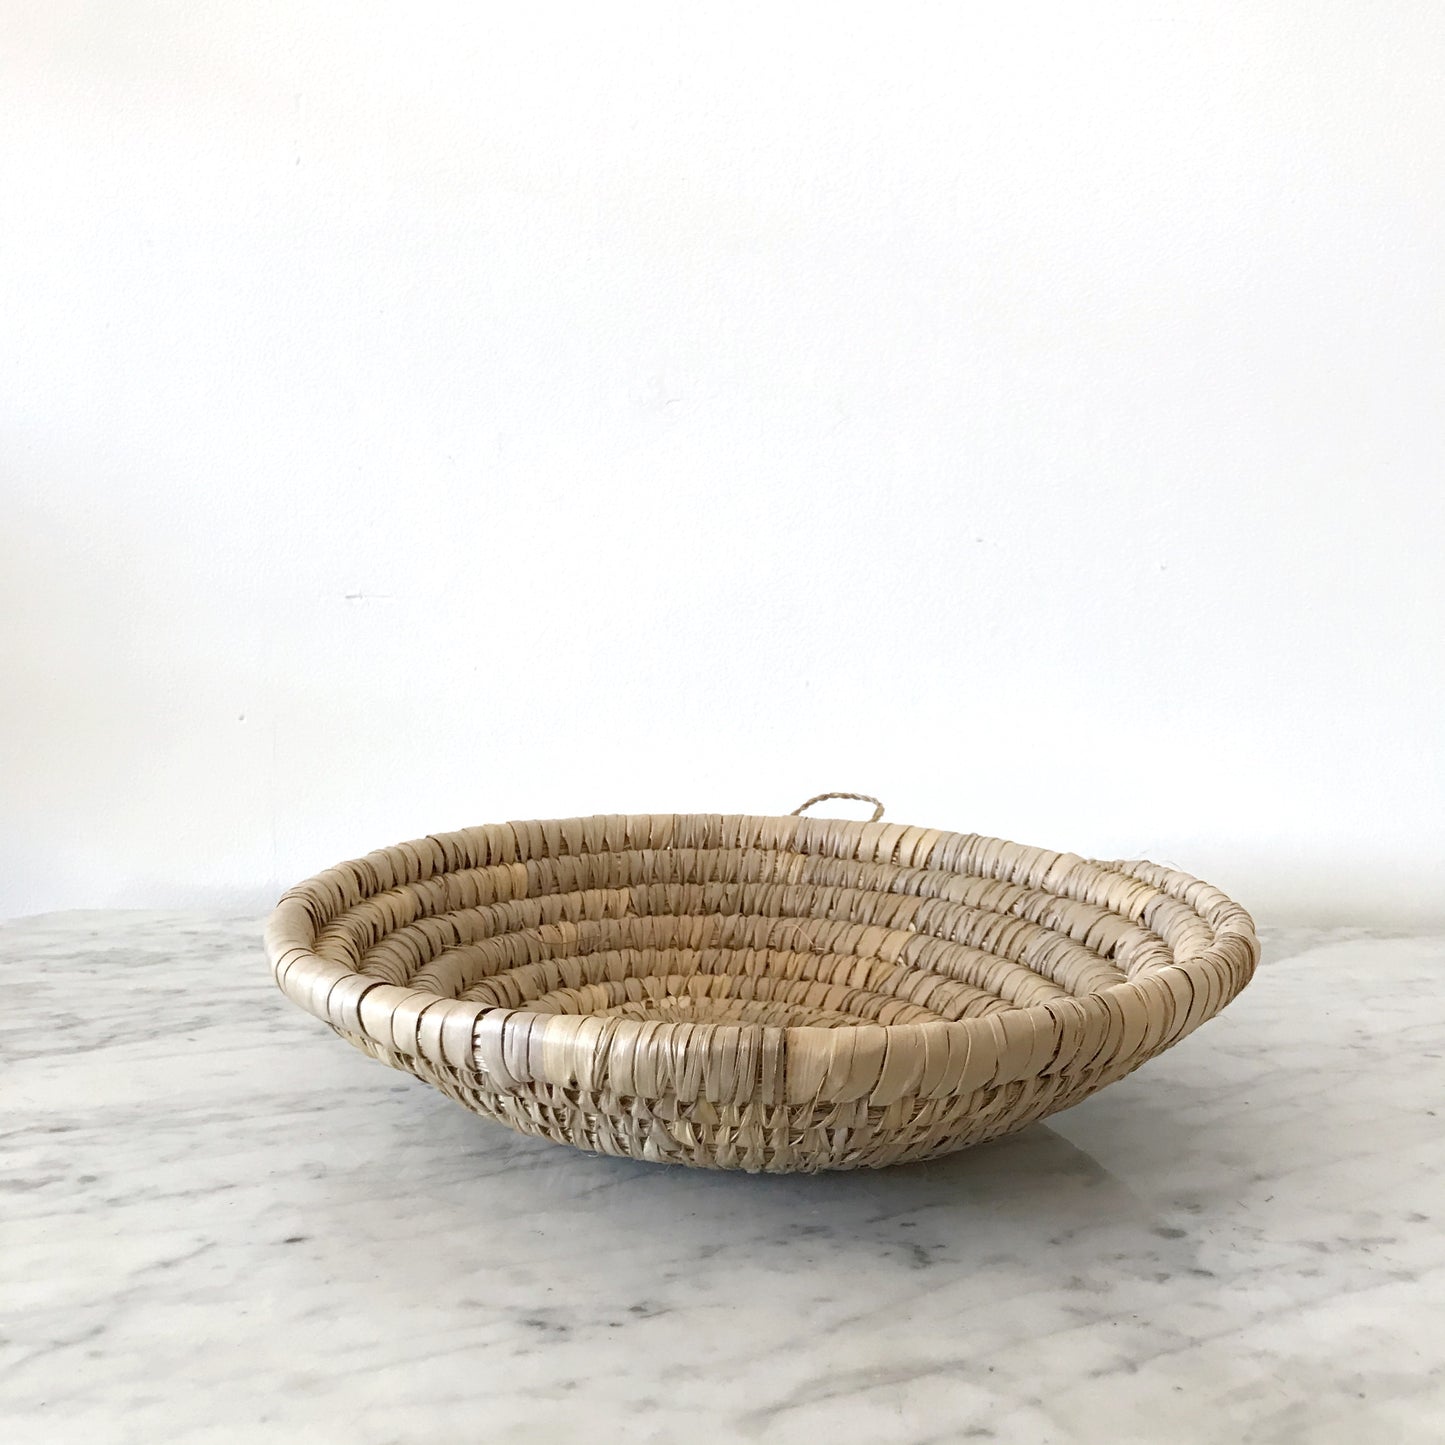 Vintage Woven Wall Basket / Bowl